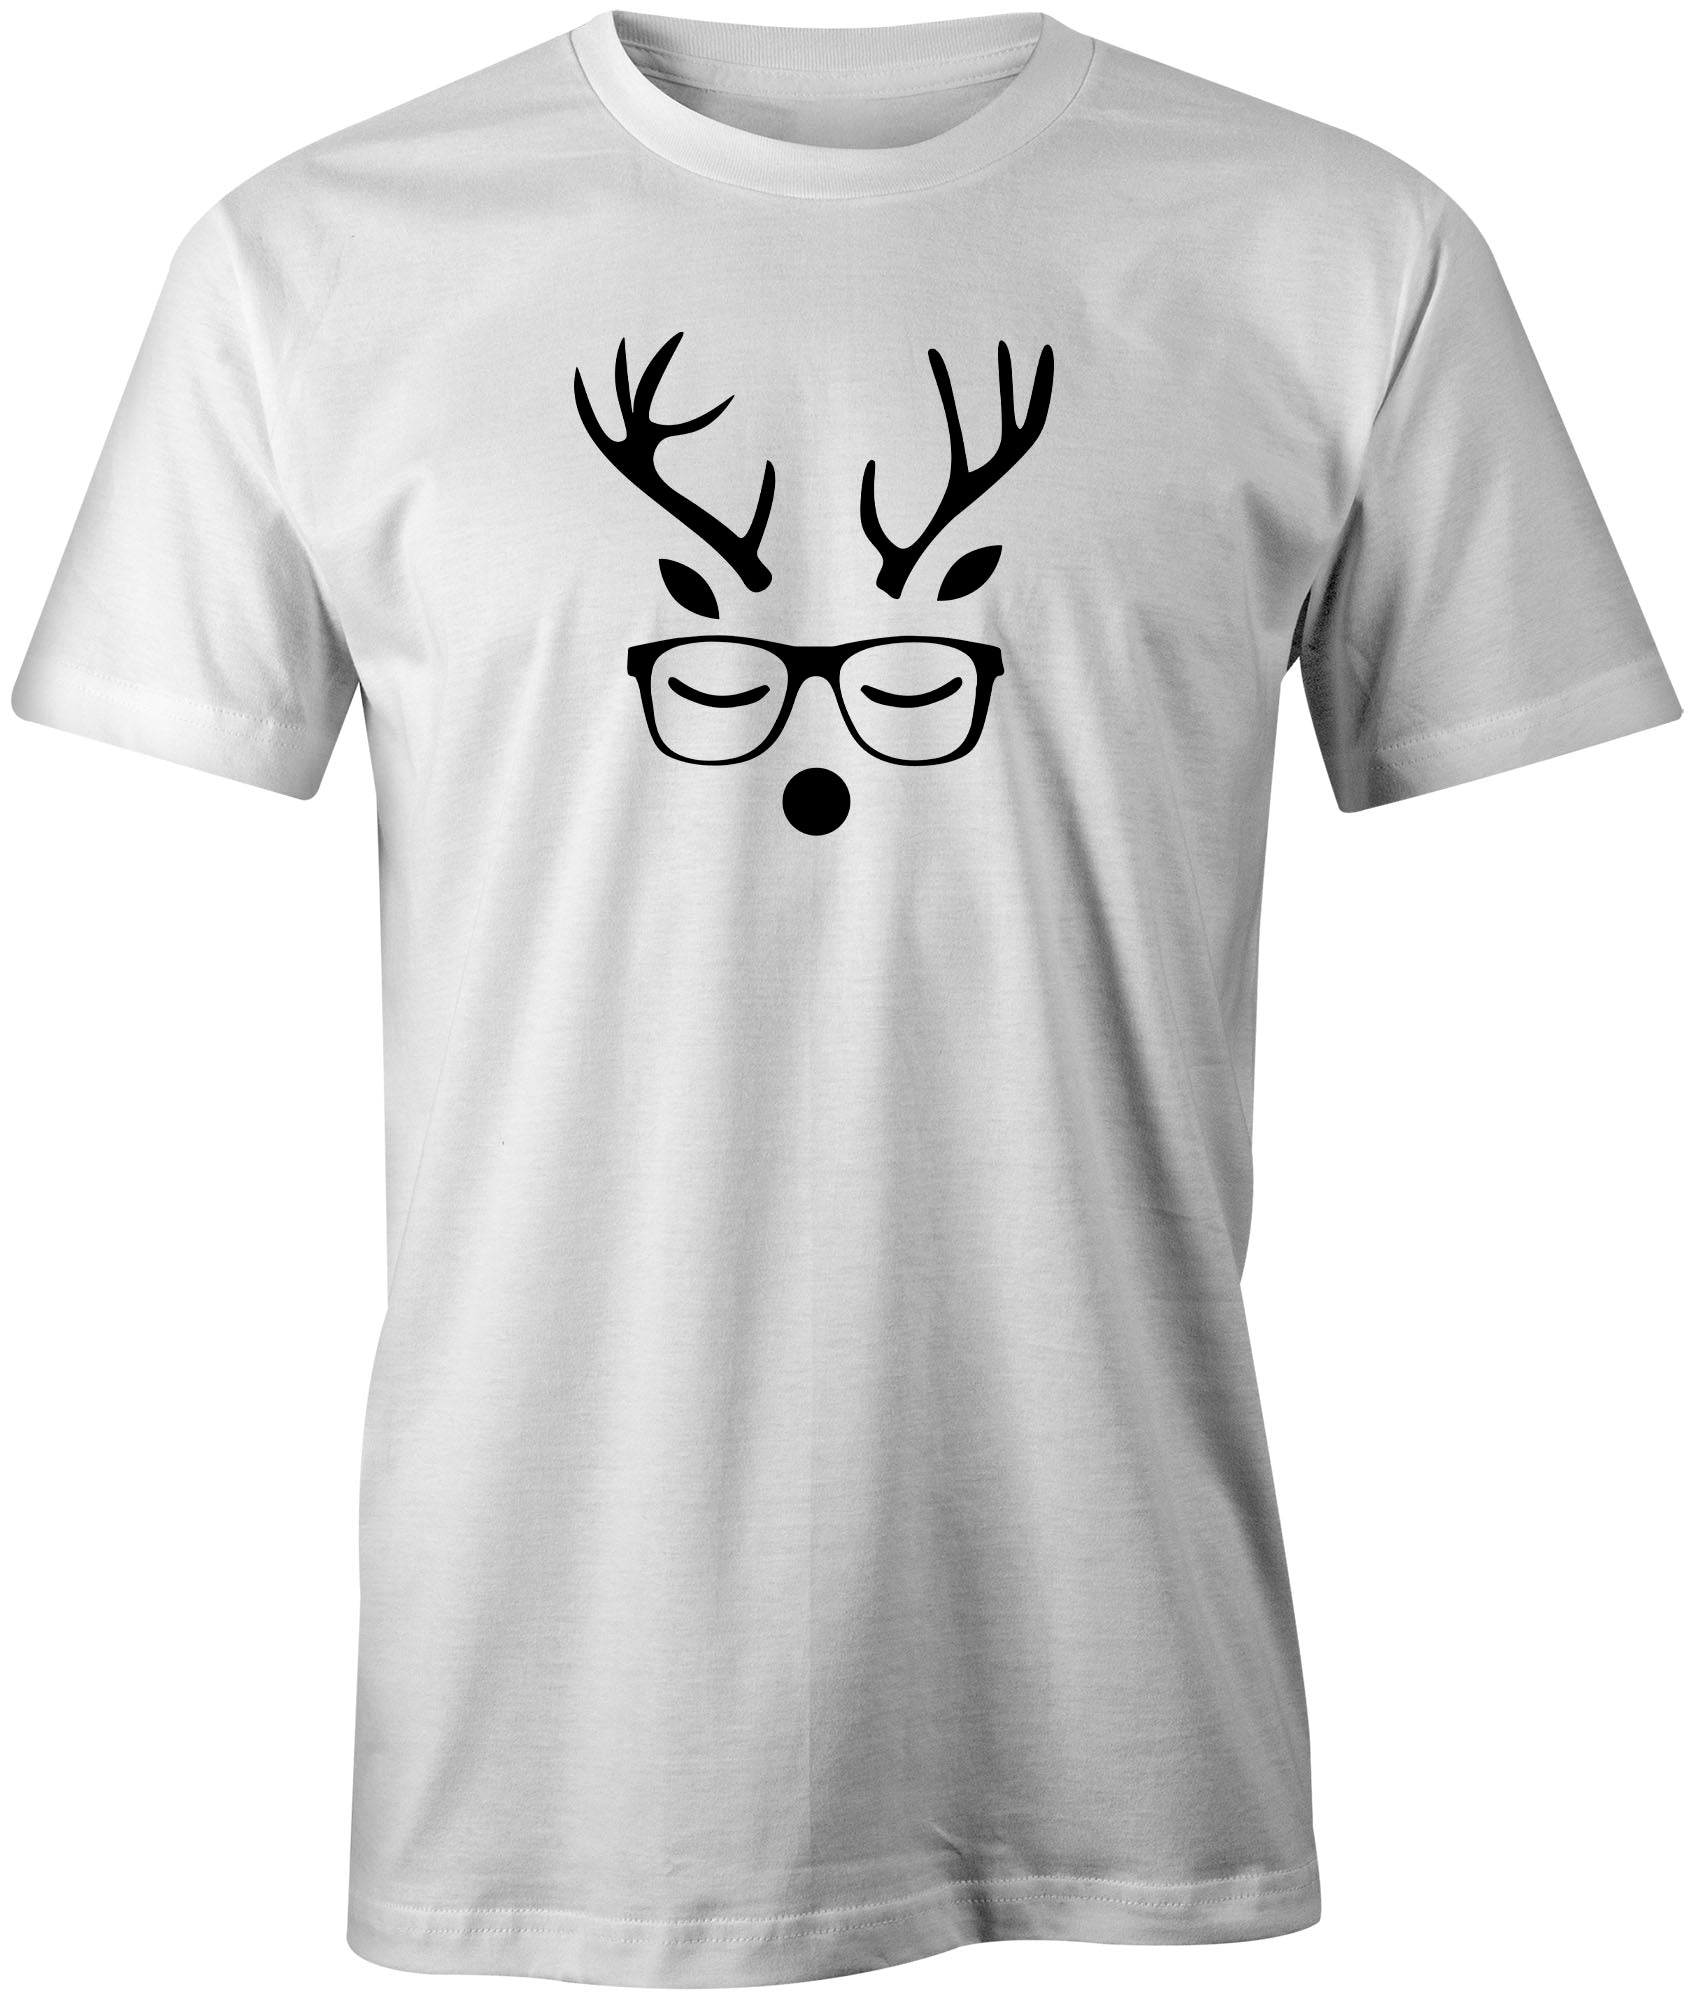 Reindeer Boy Kids Xmas T-Shirt